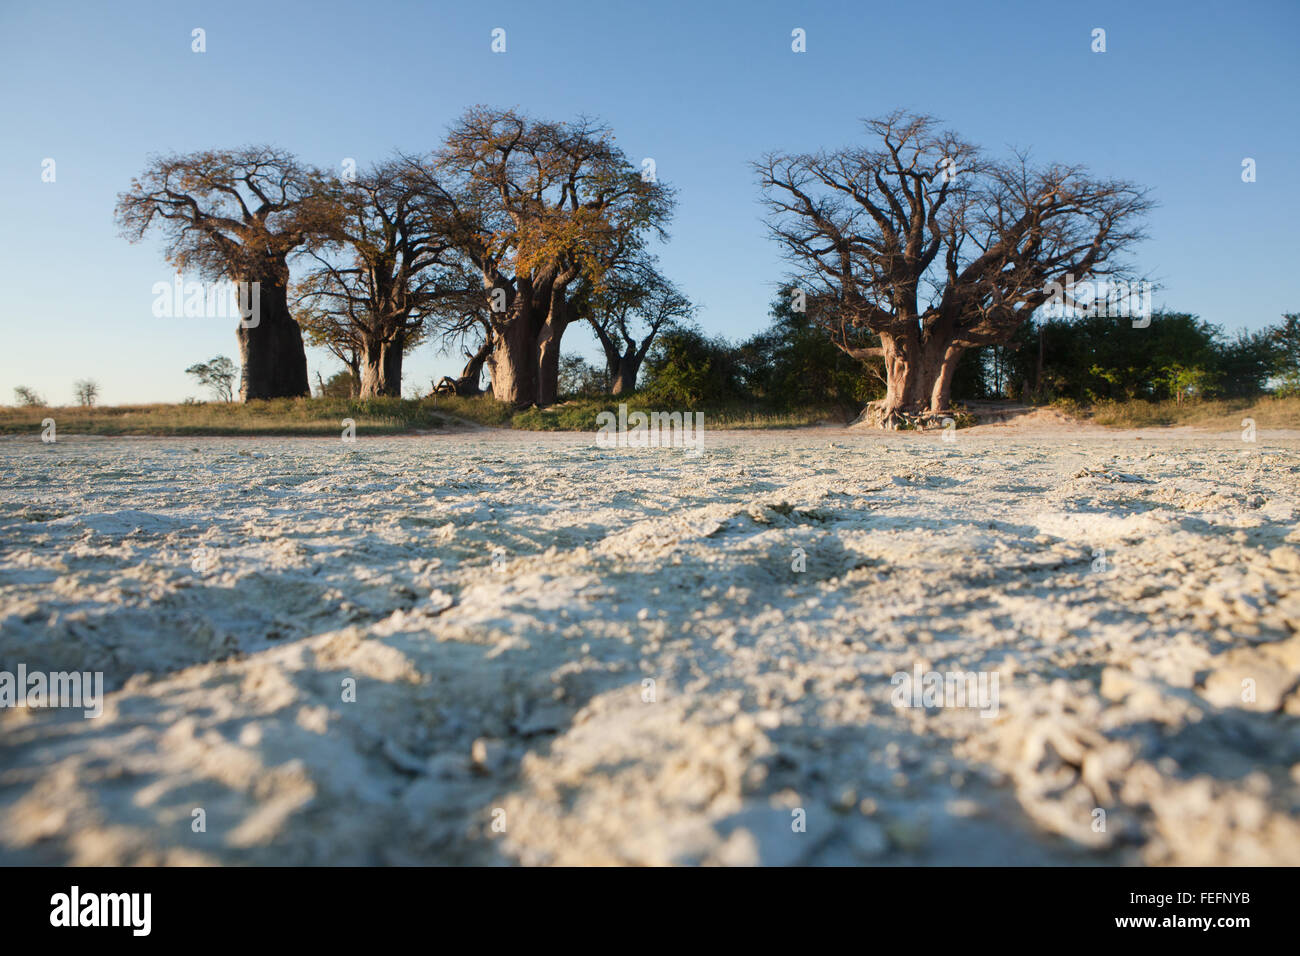 Baines Baobab in Botswana Foto Stock